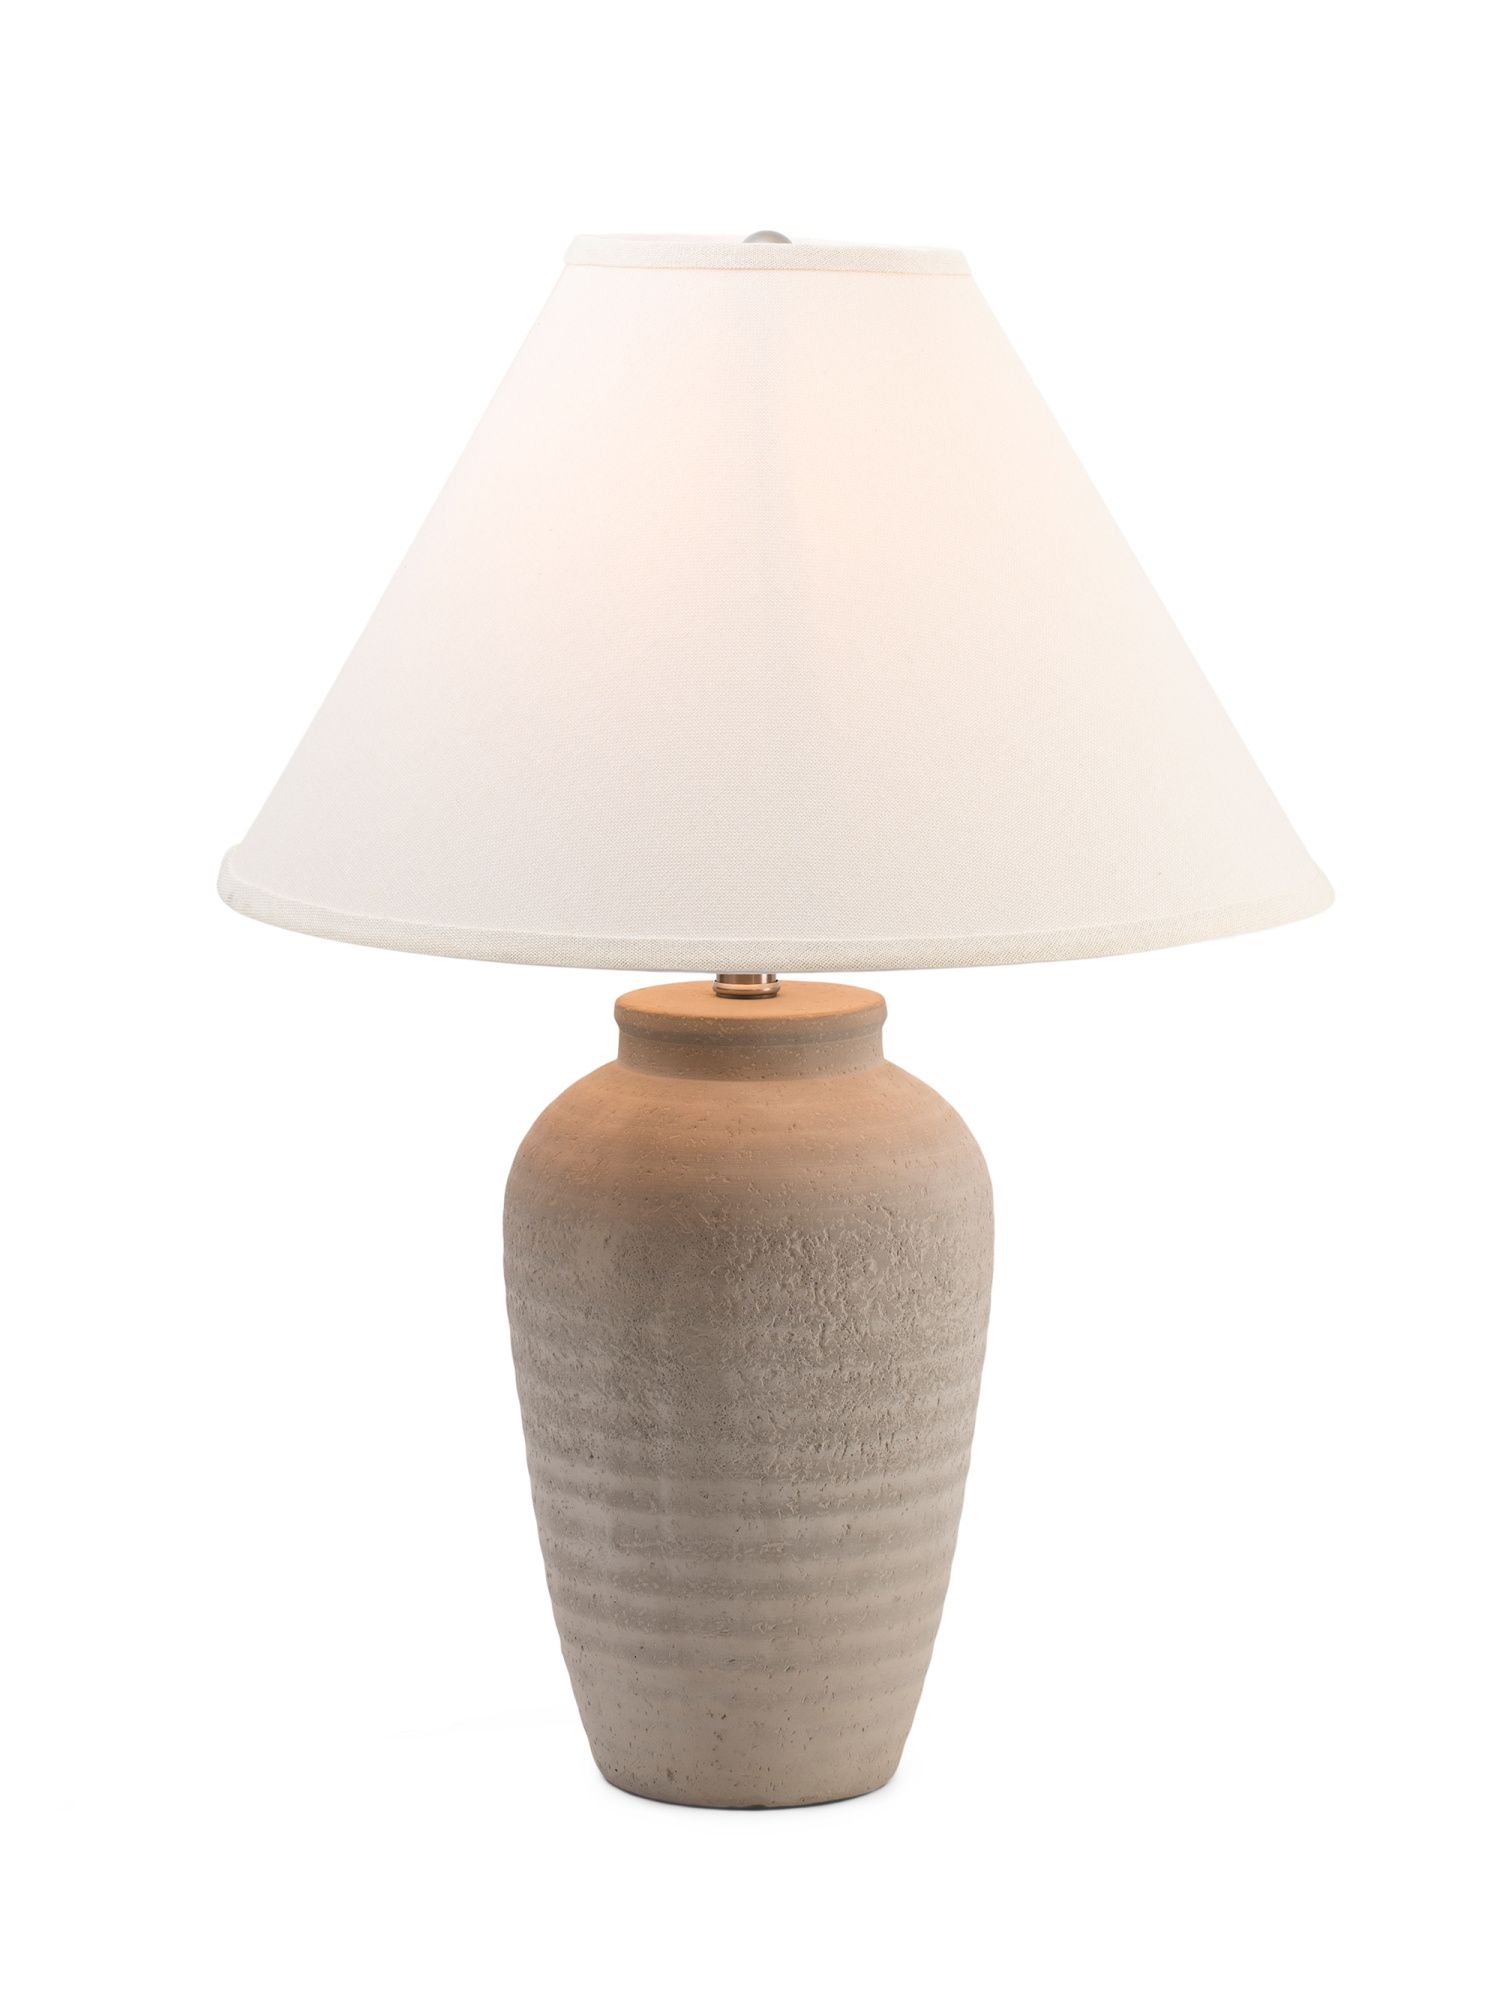 26in Navagio Table Lamp | TJ Maxx